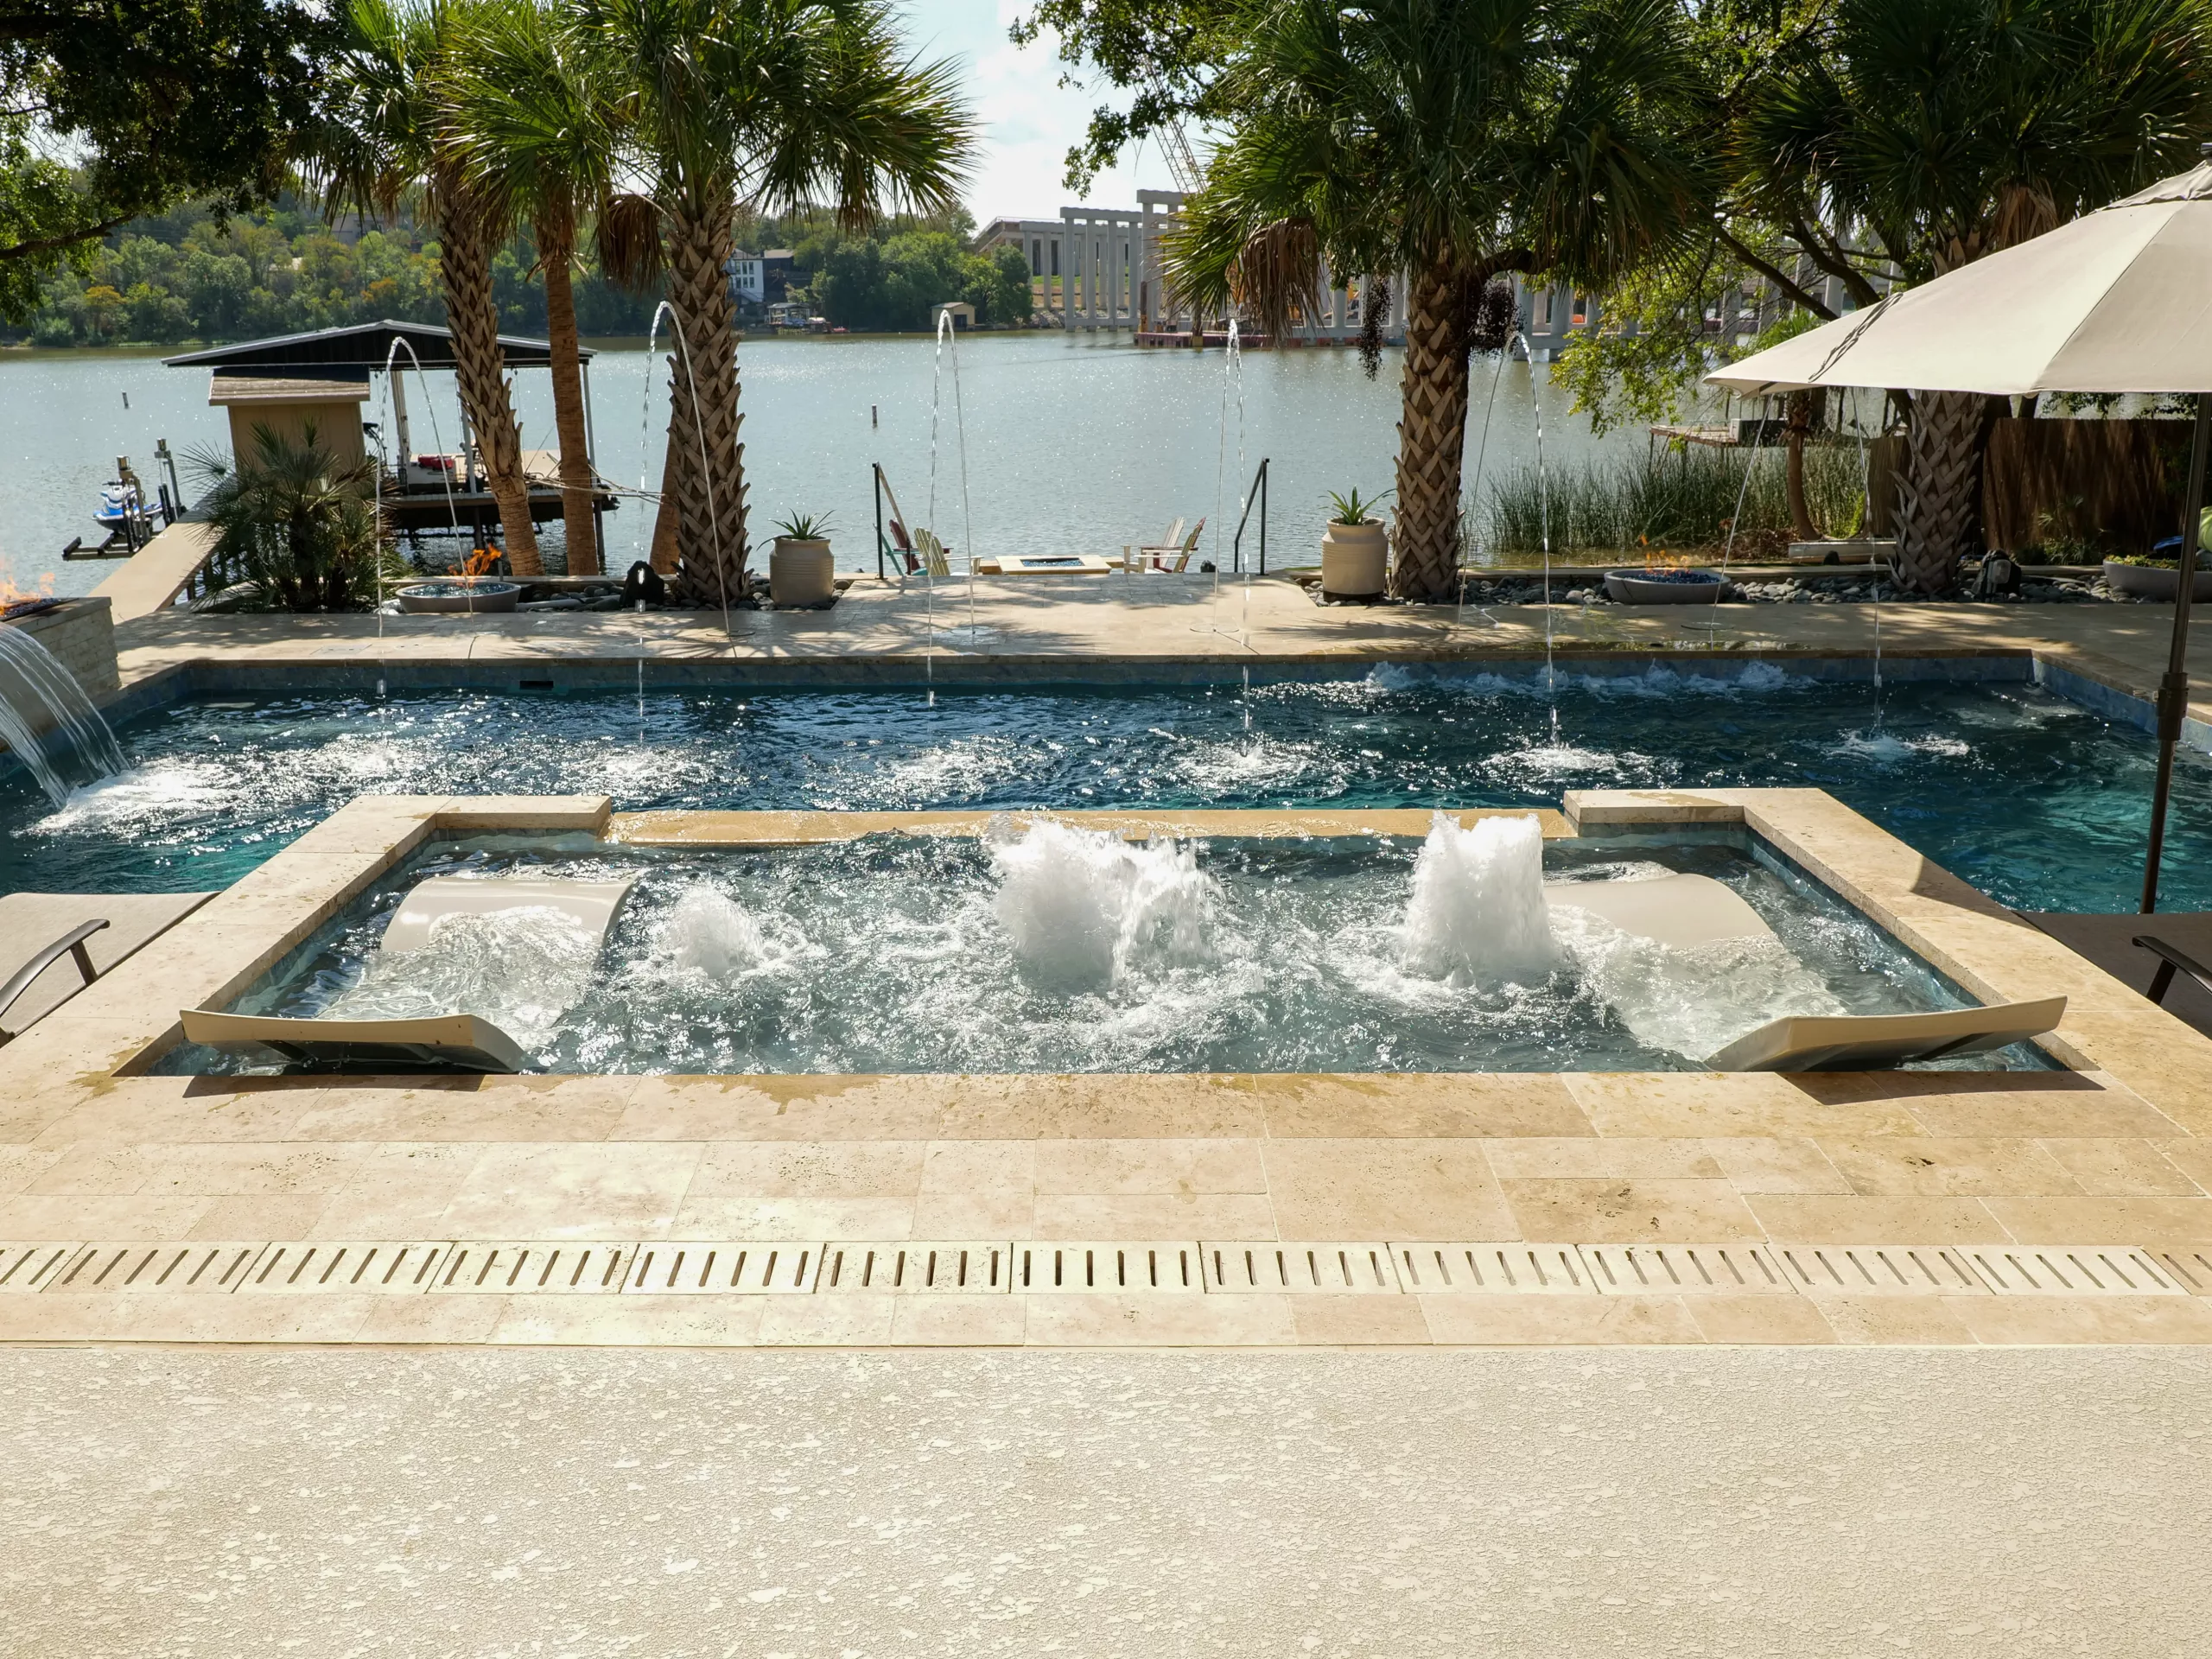 Leisure Pools Supreme 35 inground fiberglass swimming pool with tanning ledge